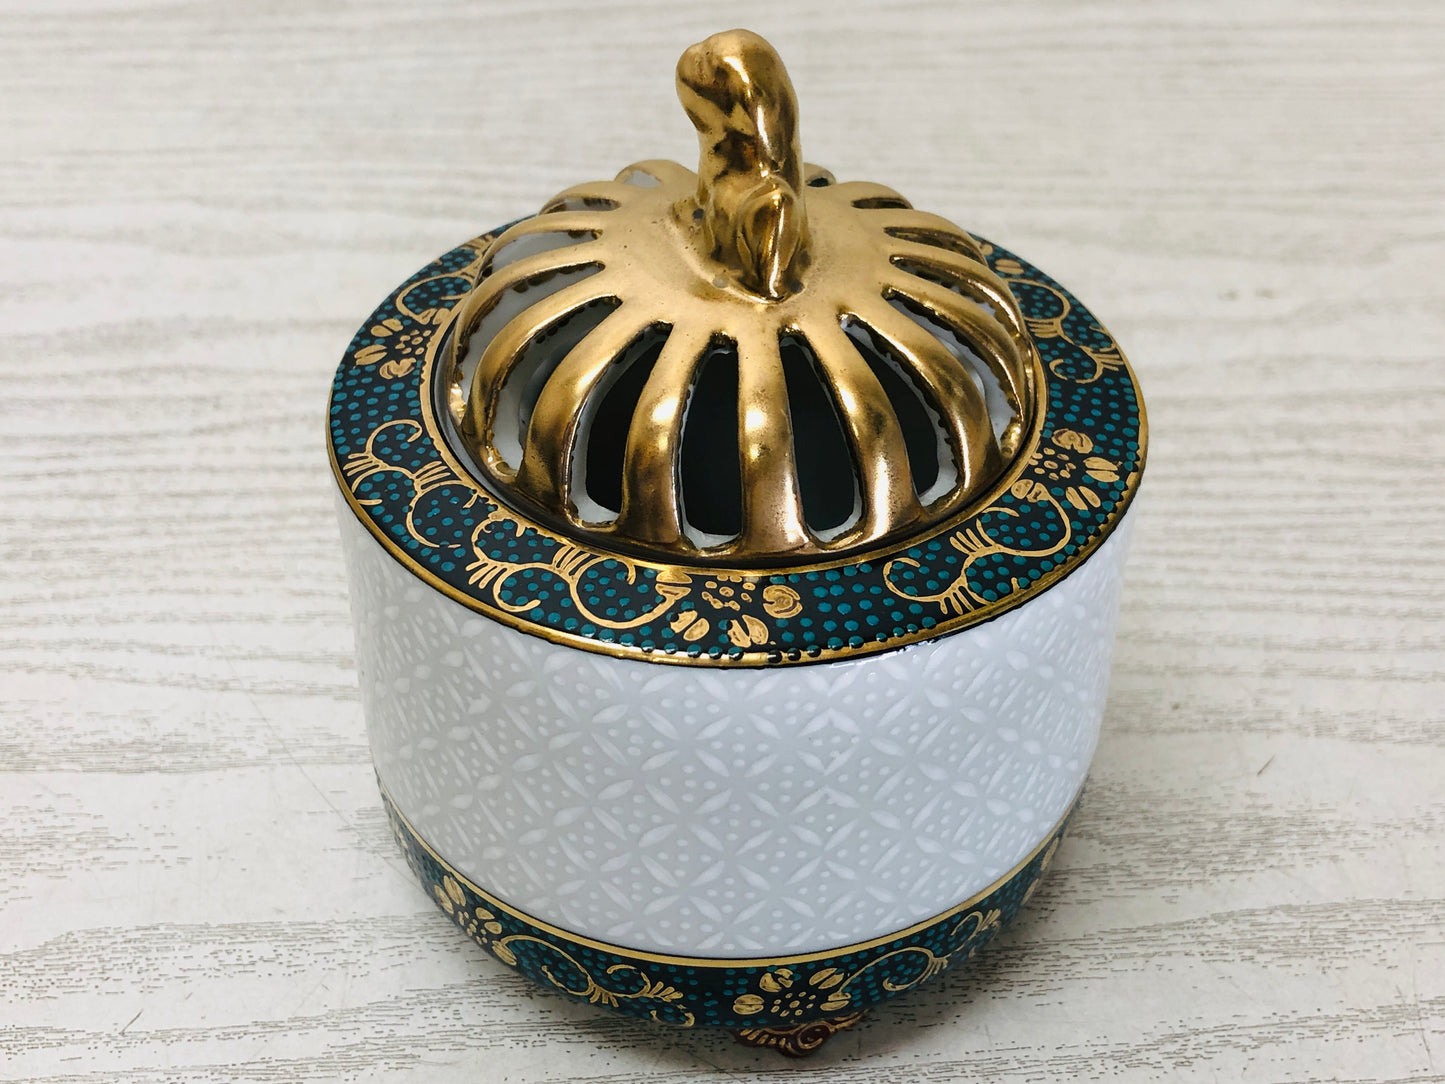 Y3351 KOURO Kutani-ware signed box Japan antique fragrance aroma incense burner